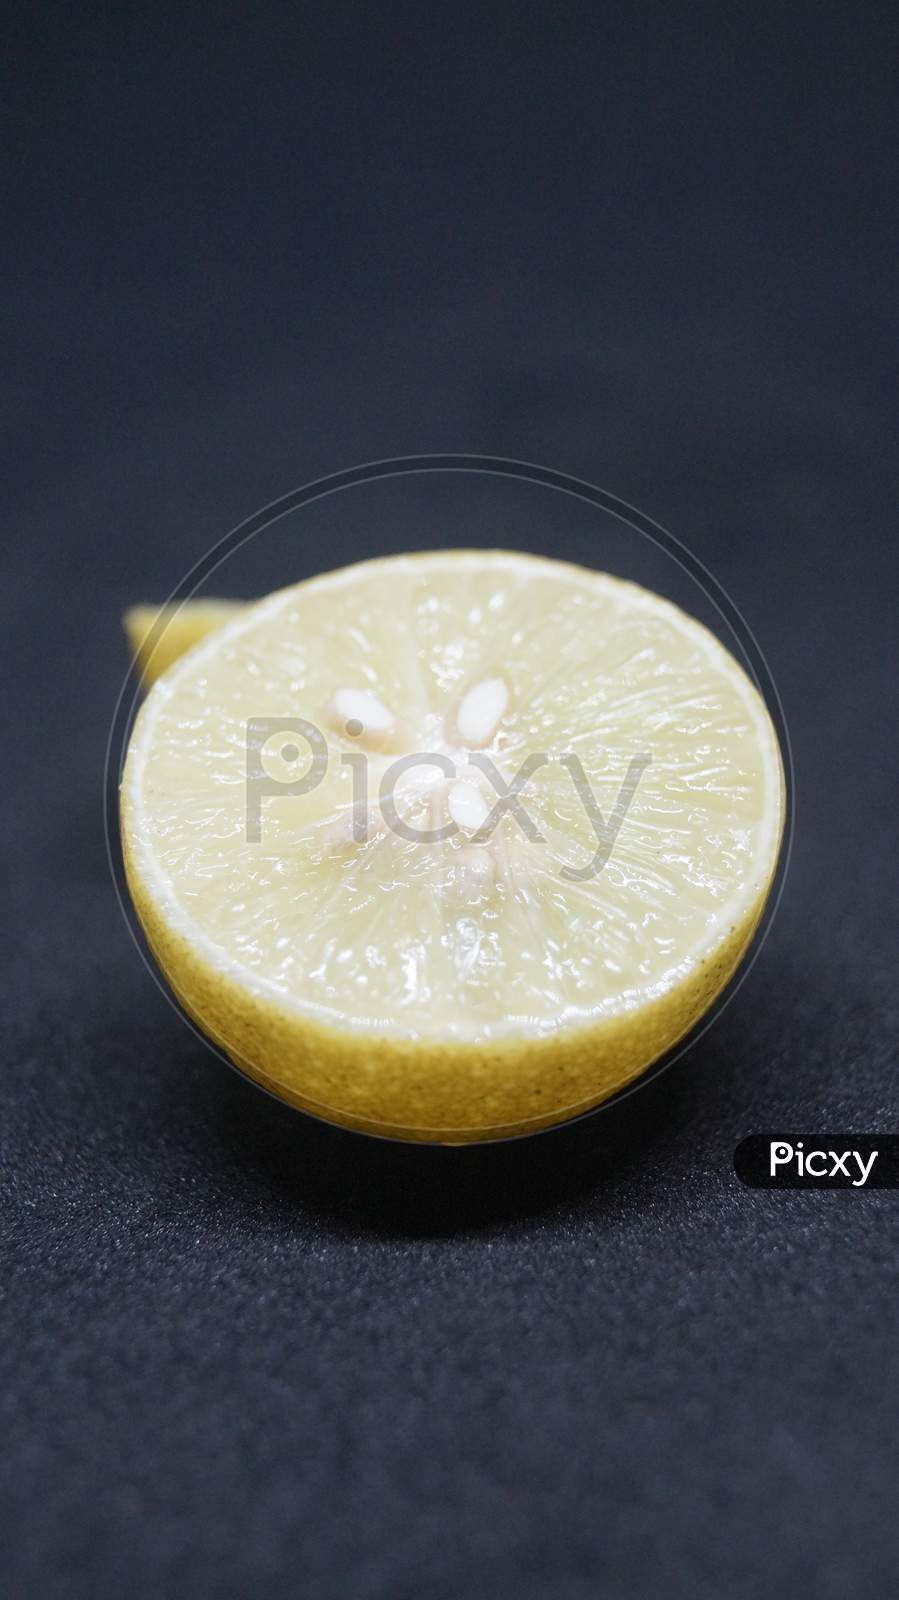 Slice of lemon with black background